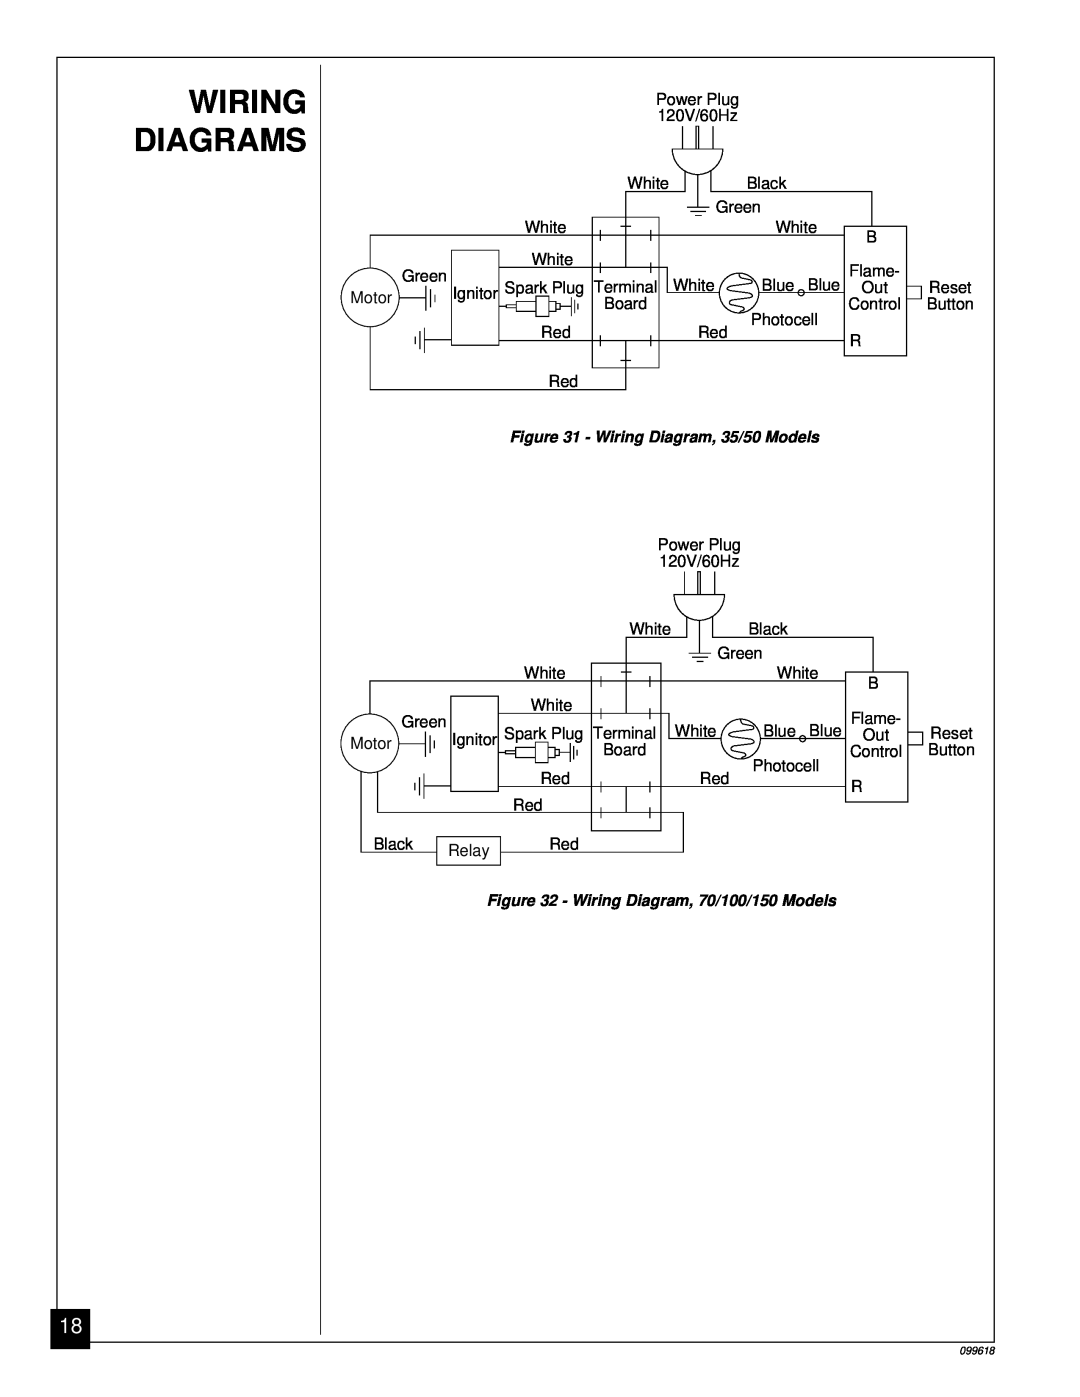 Desa owner manual Wiring Diagrams, Wiring Diagram, 35/50 Models, Wiring Diagram, 70/100/150 Models 